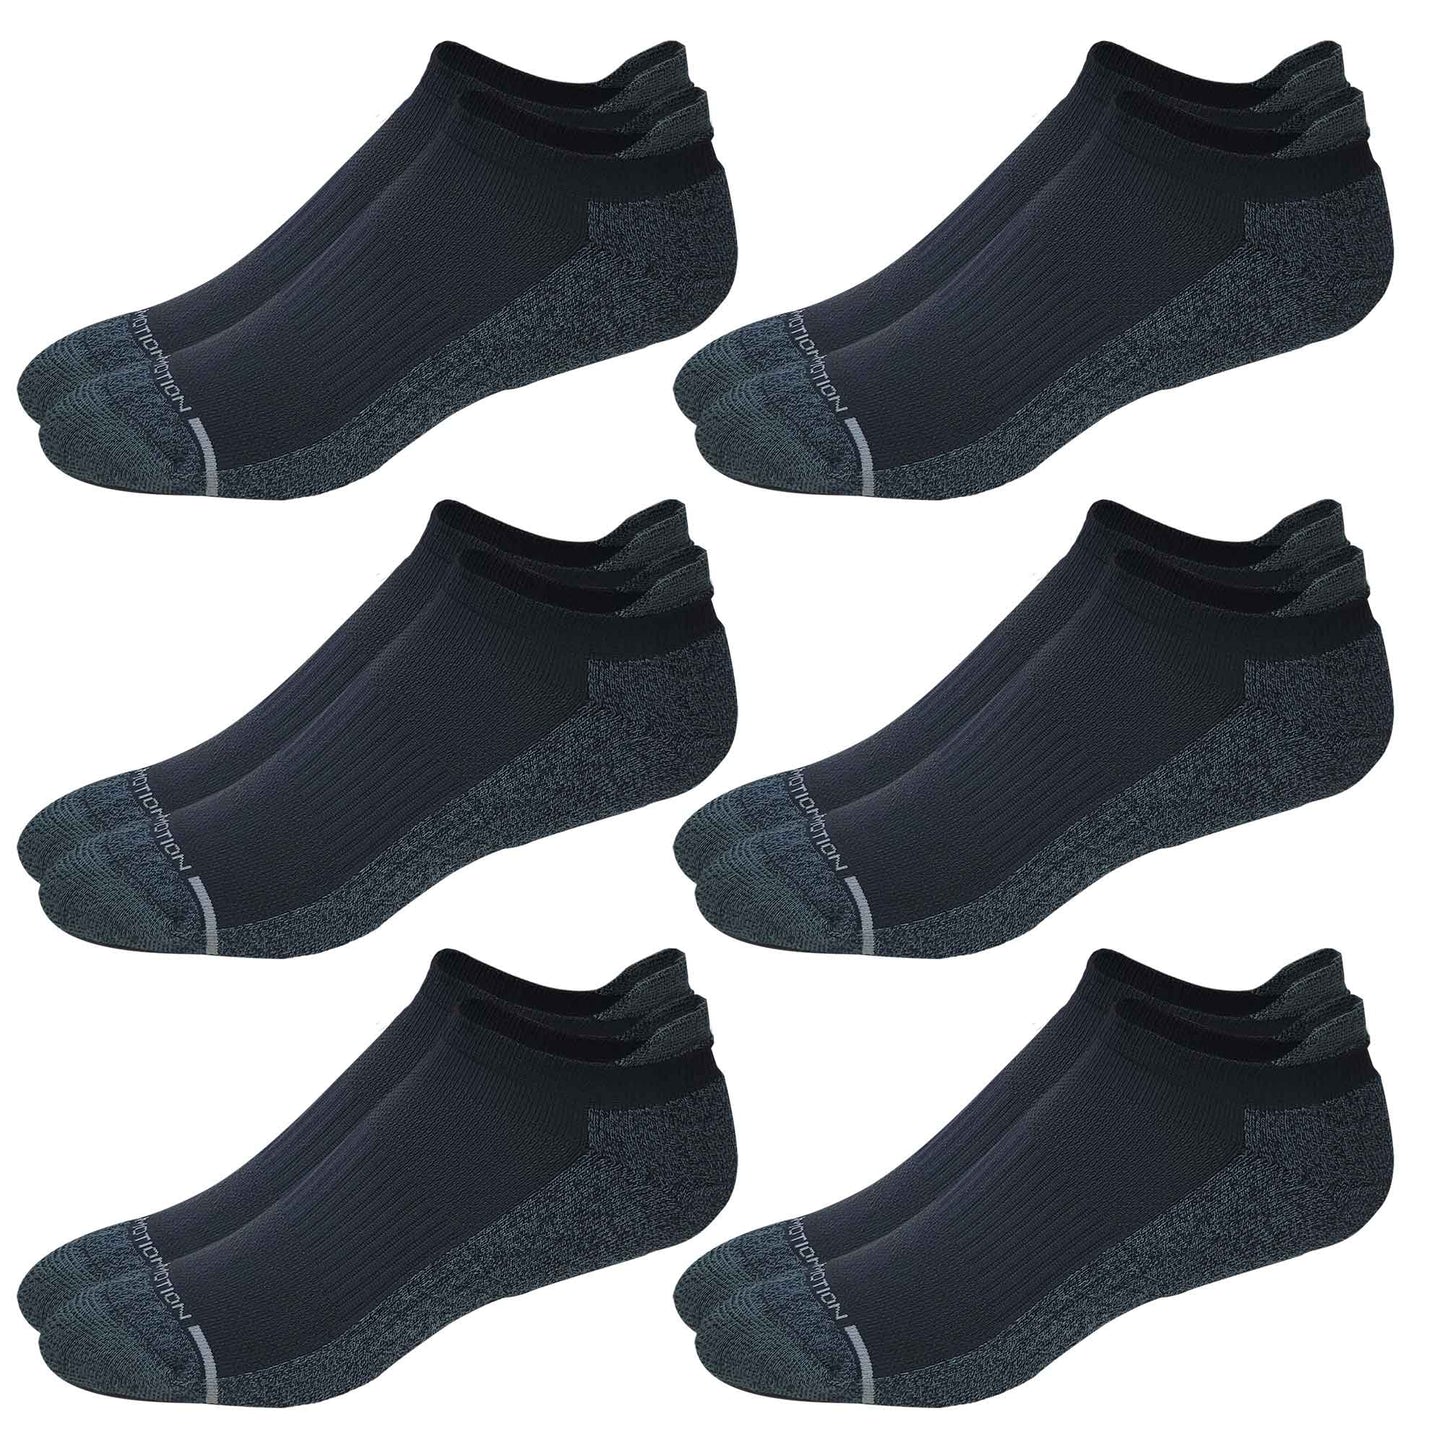 Compression Ankle Socks | Basic Colors Everyday | Men's (6 Pack)